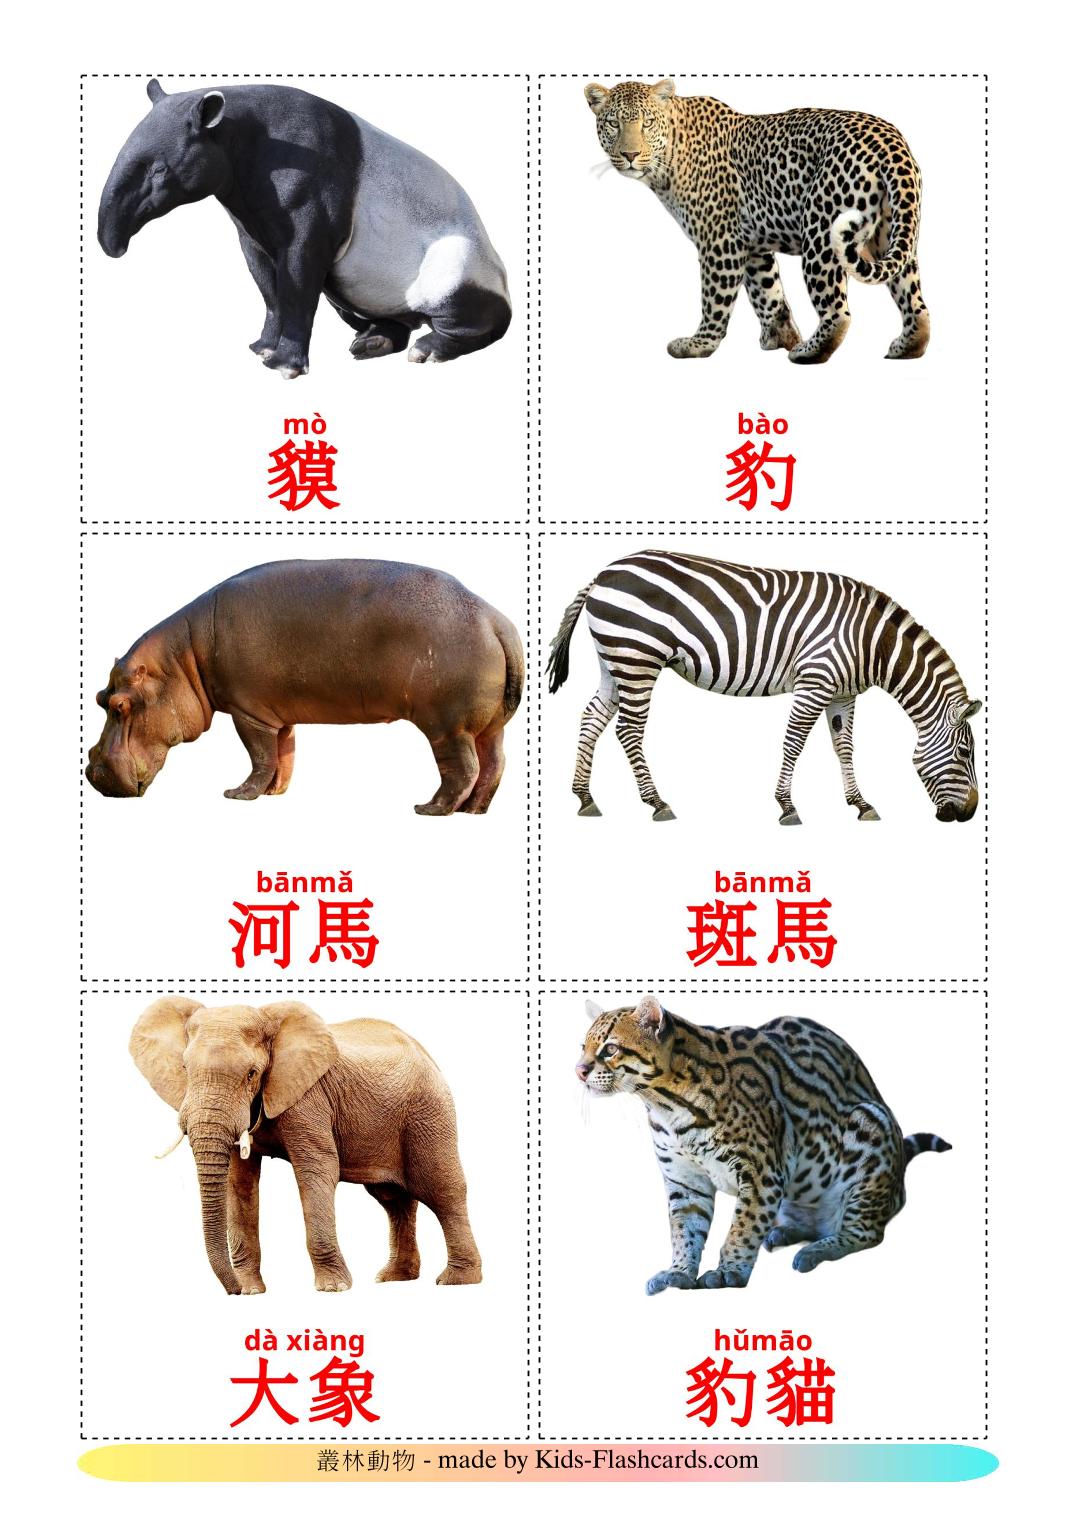 Jungle animals - 21 Free Printable cantonese(Colloquial) Flashcards 